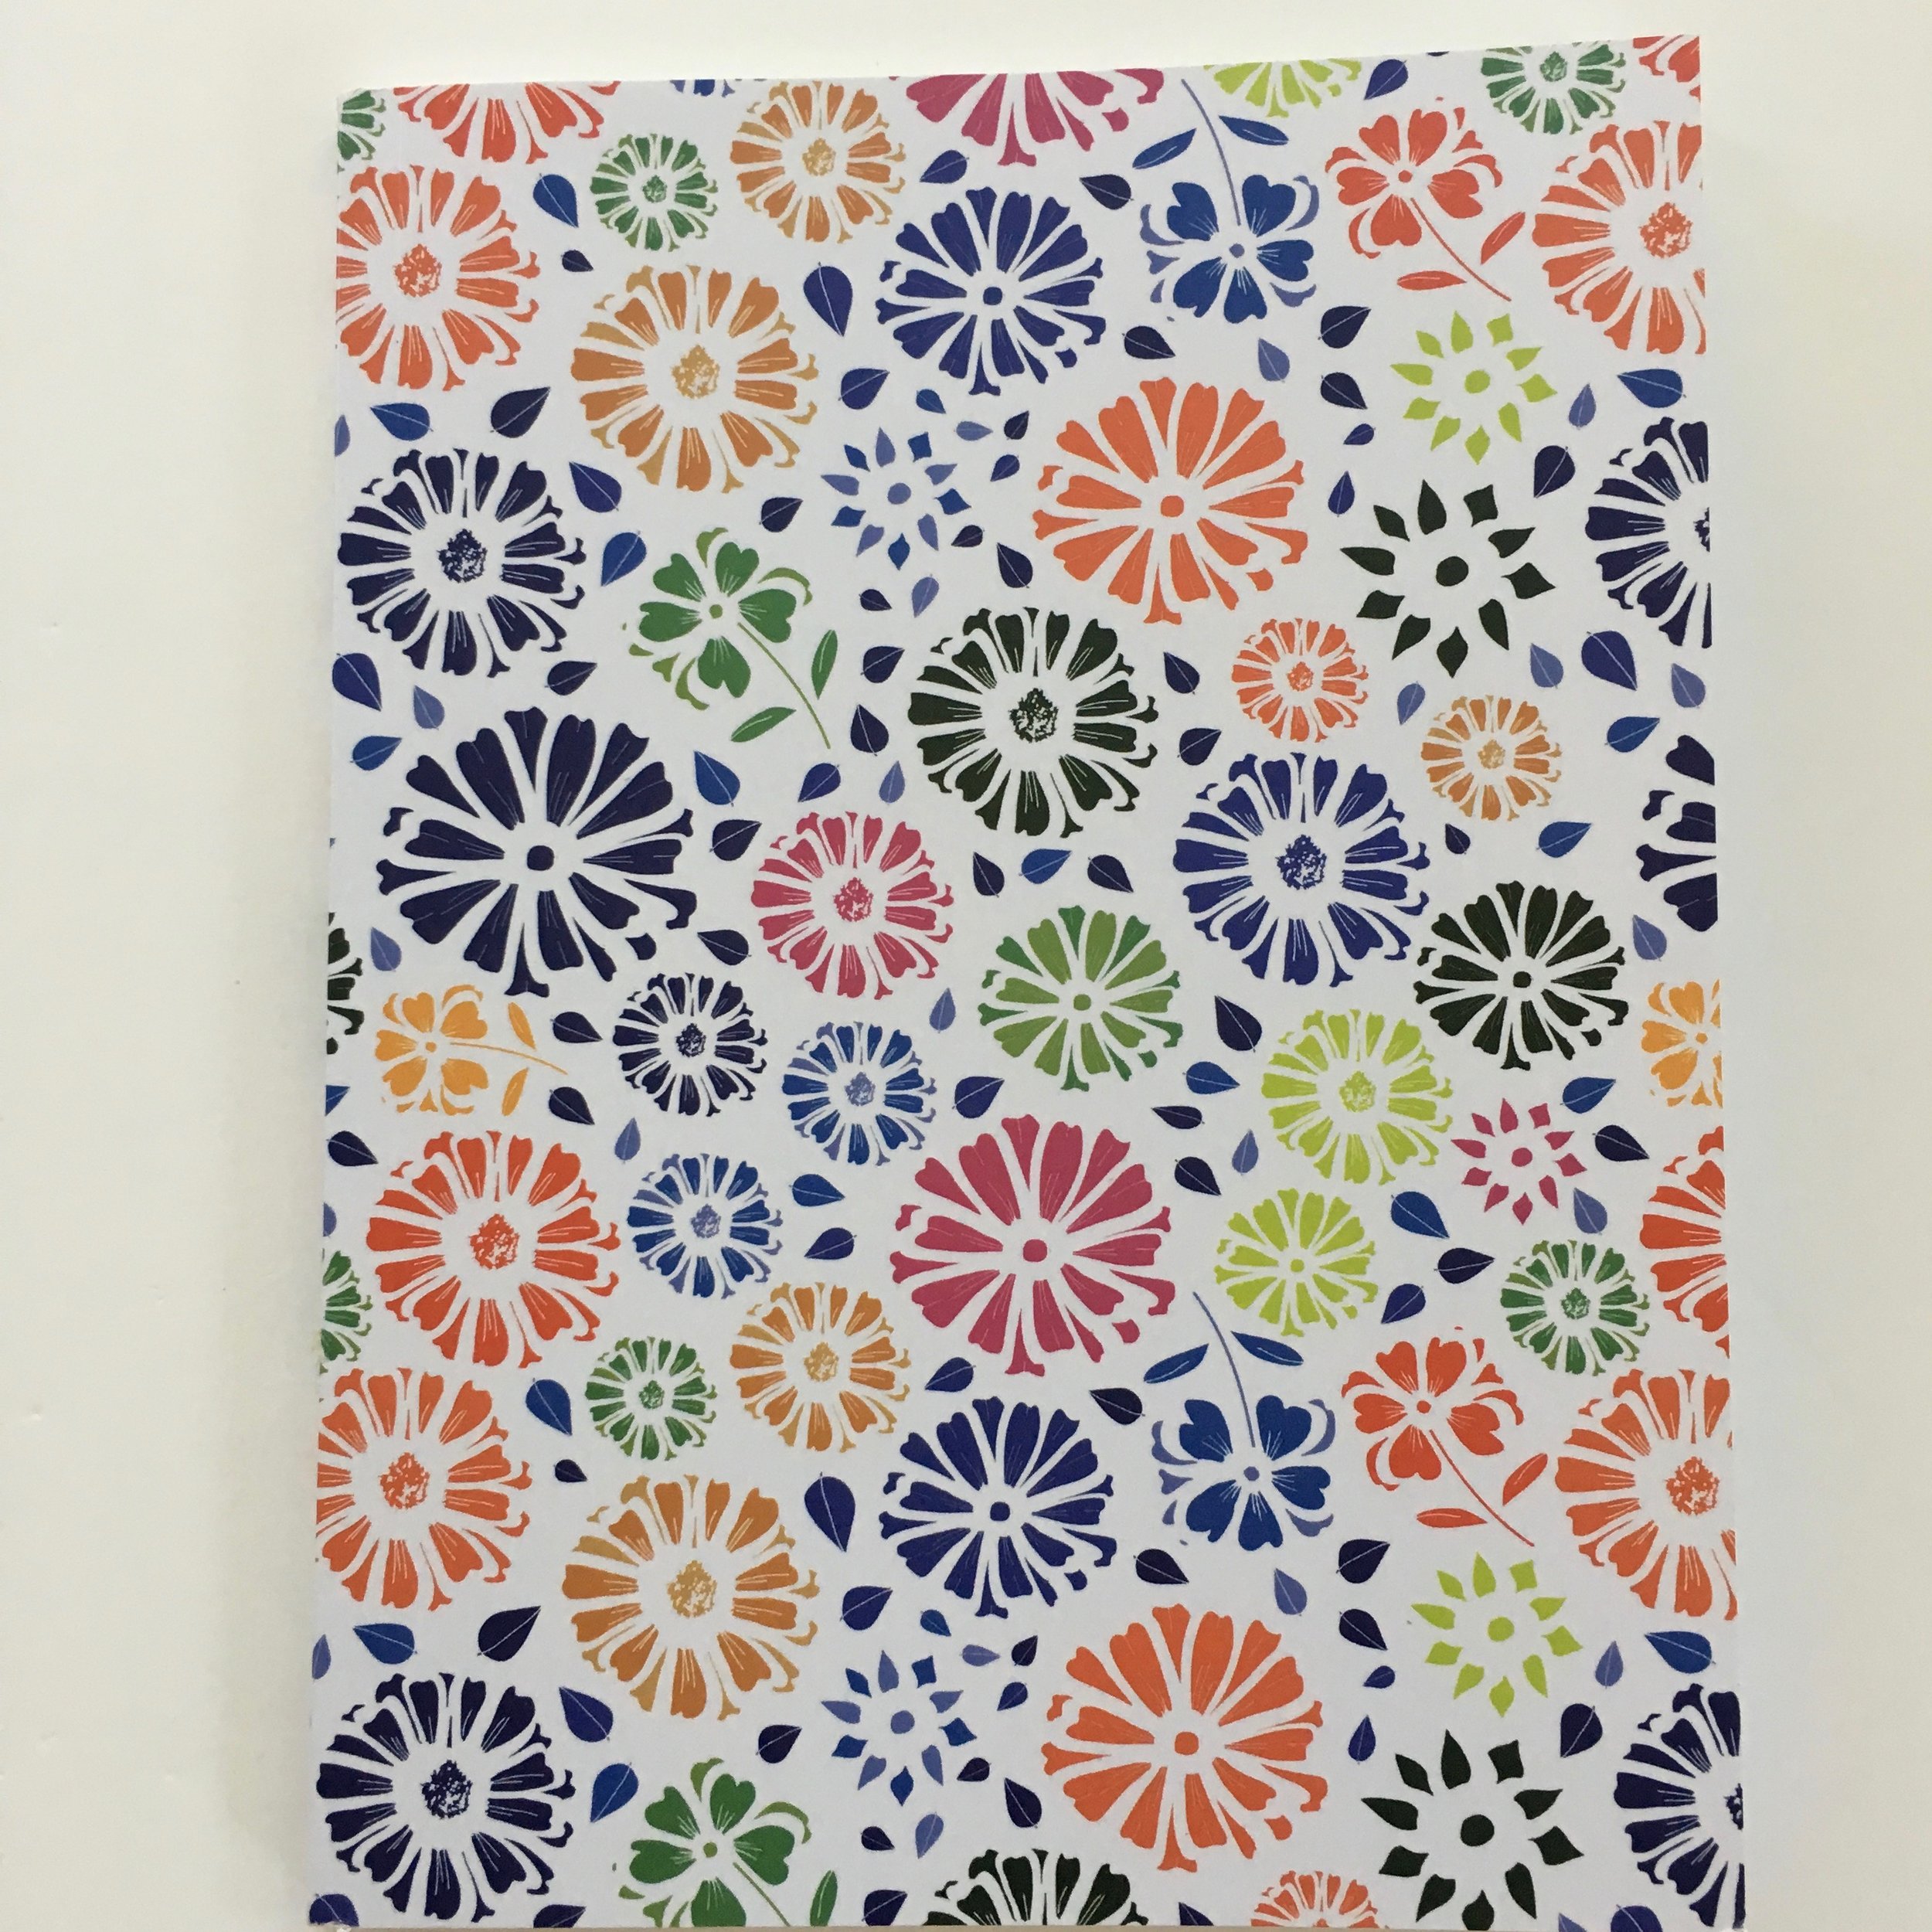 Matisse notebook.jpg